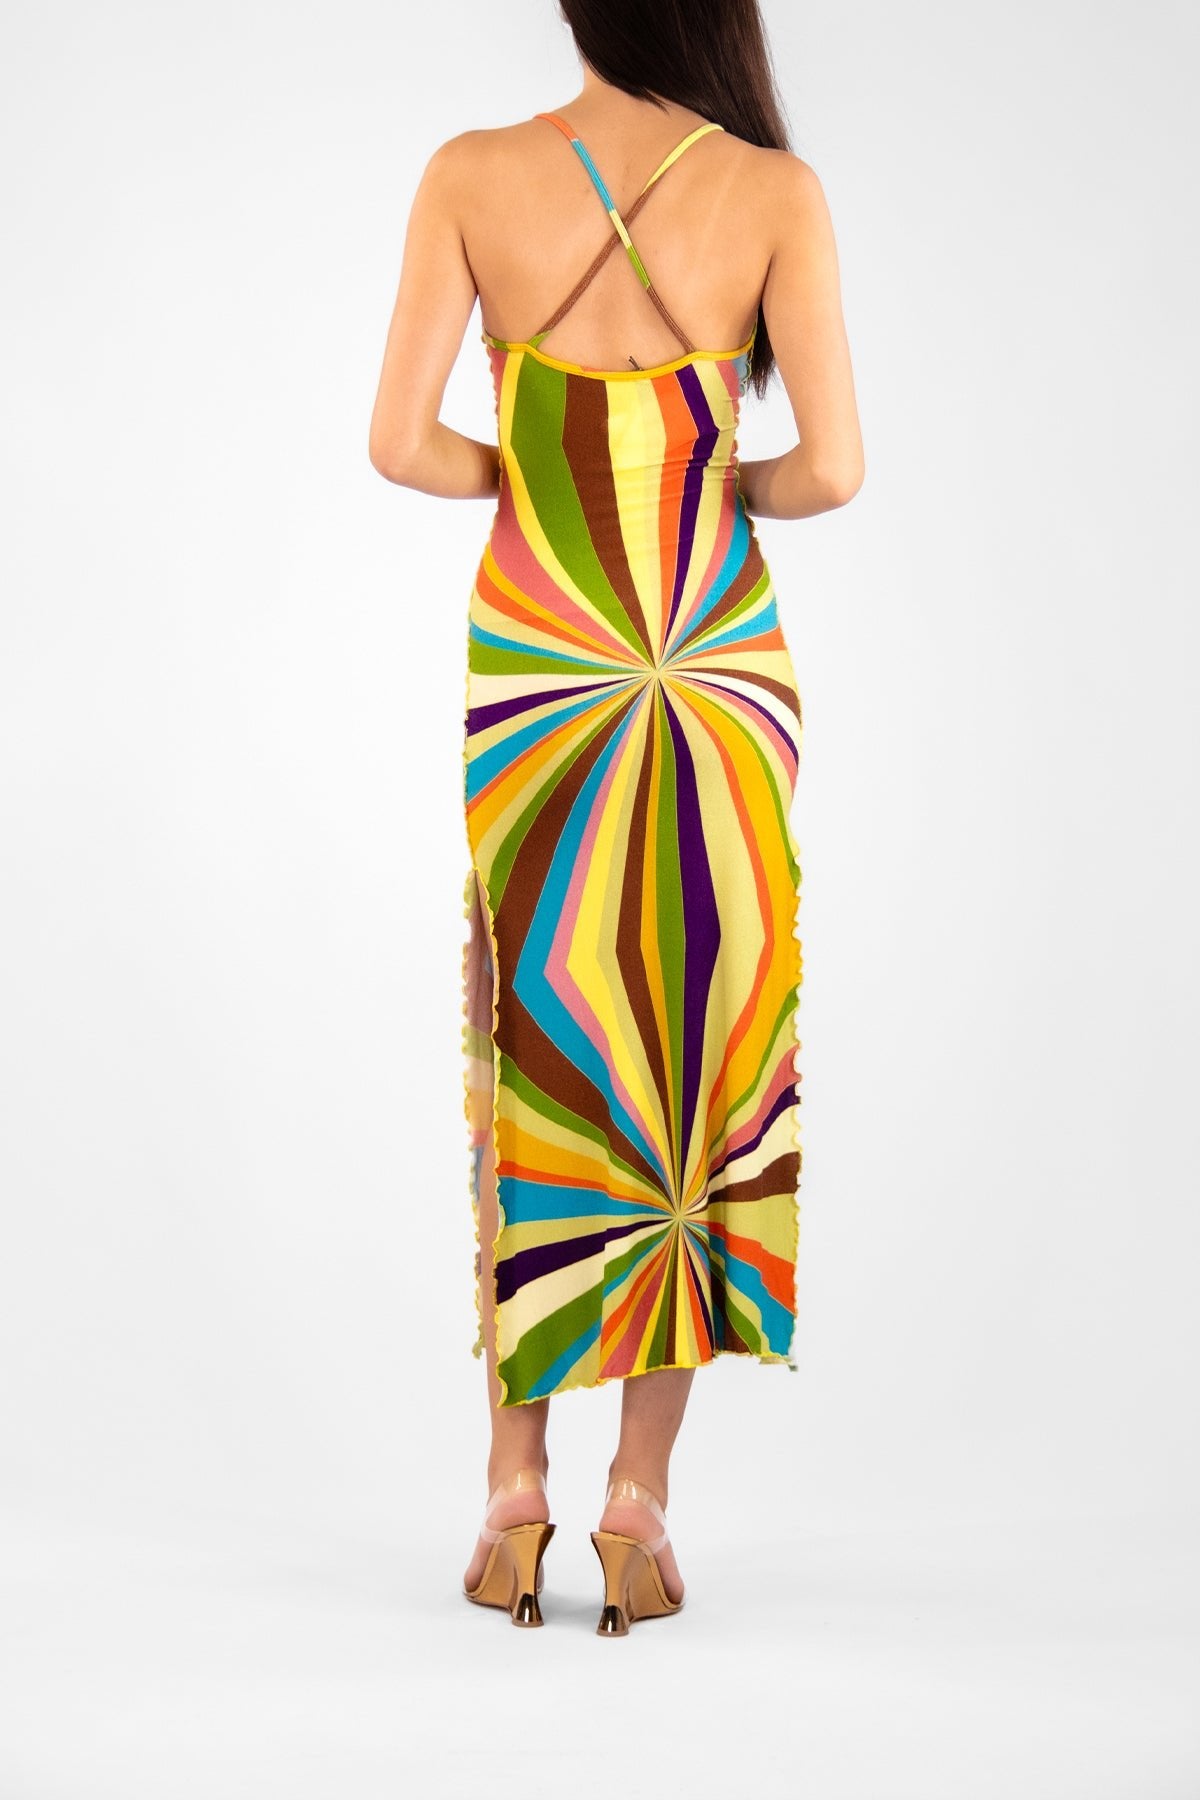 Solana Sun Ray Knit Maxi Dress in Multi - shop-olivia.com